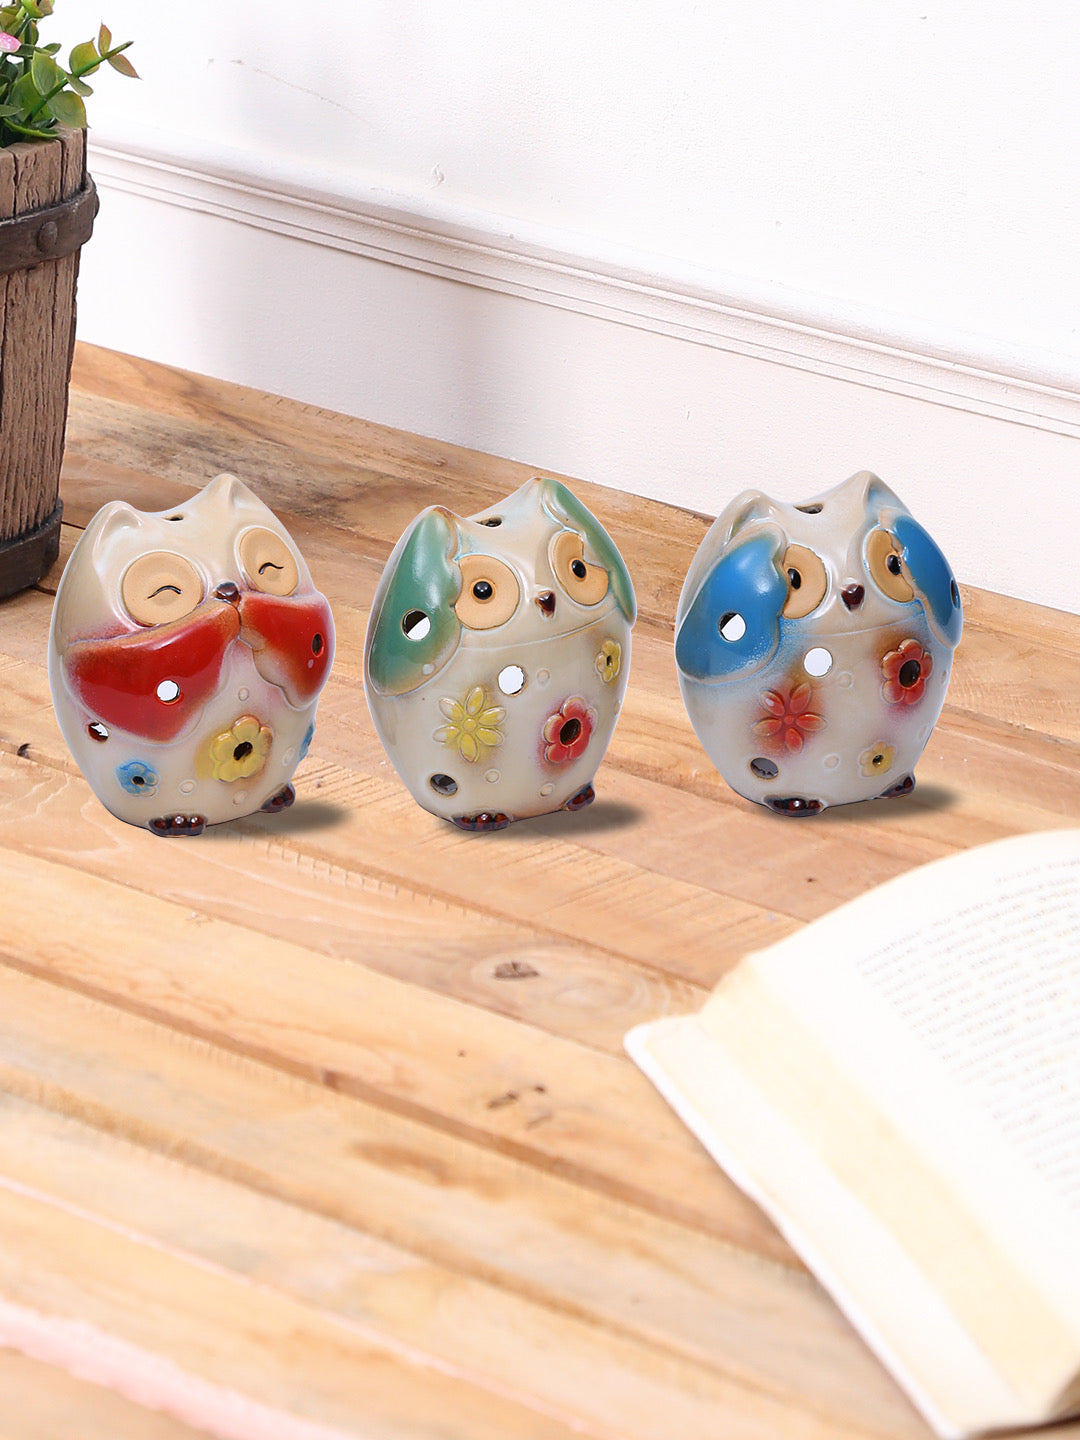 Laughing Colourful Owl Trio in Ceramic - Default Title (SHOW19545)